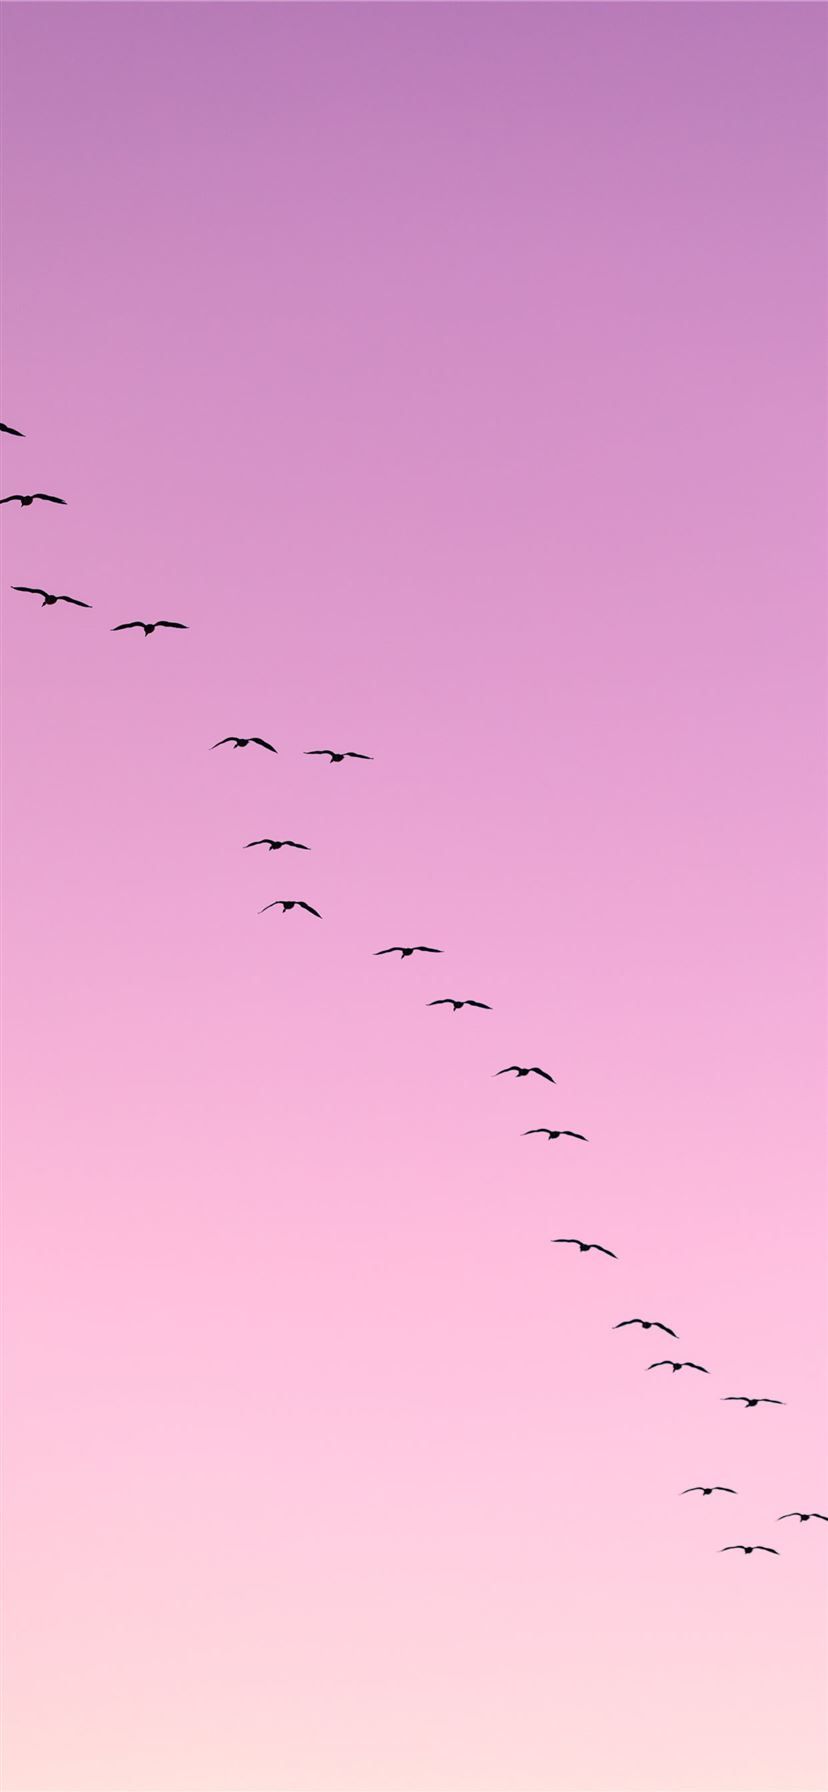 flock of birds flying iPhone 11 Wallpaper Free Download